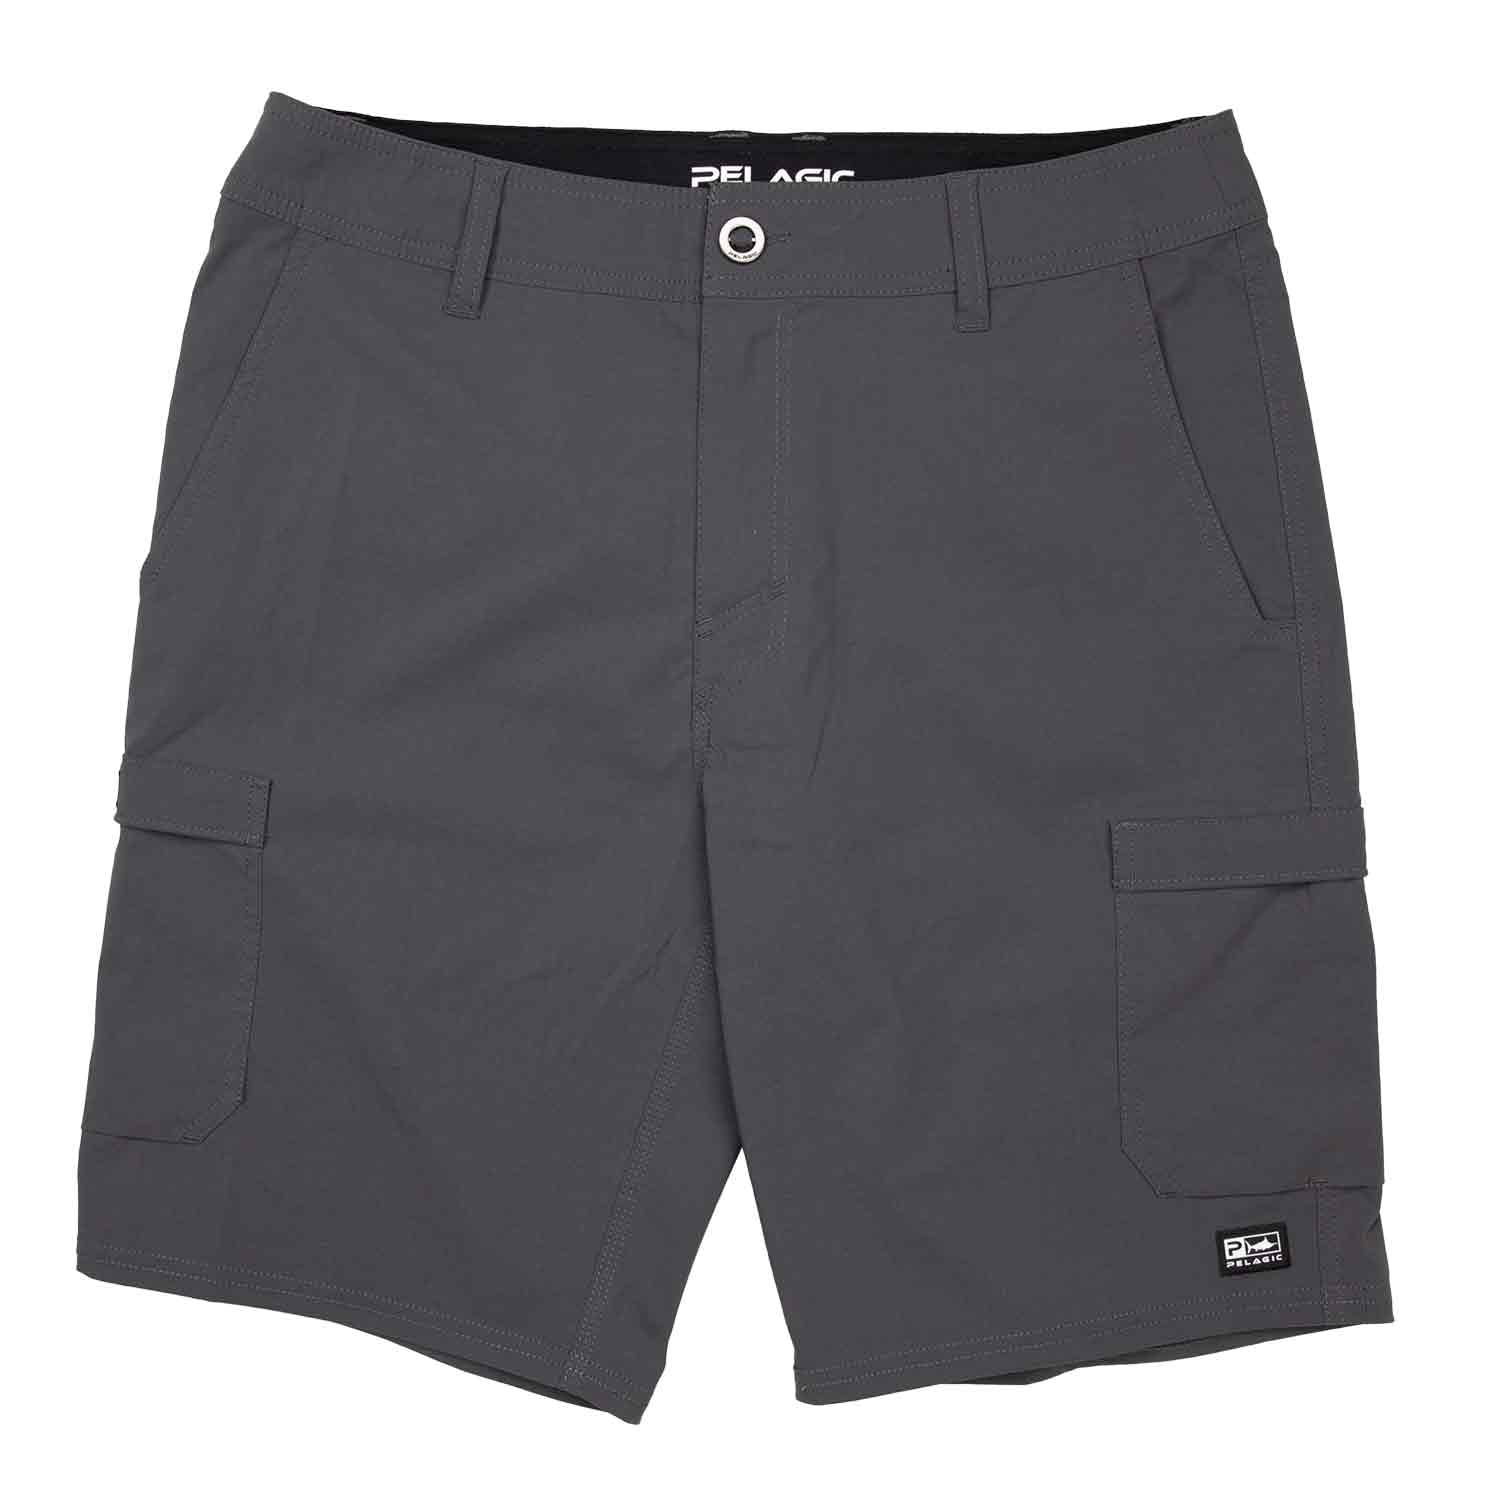 PELAGIC Shorts for Men for sale